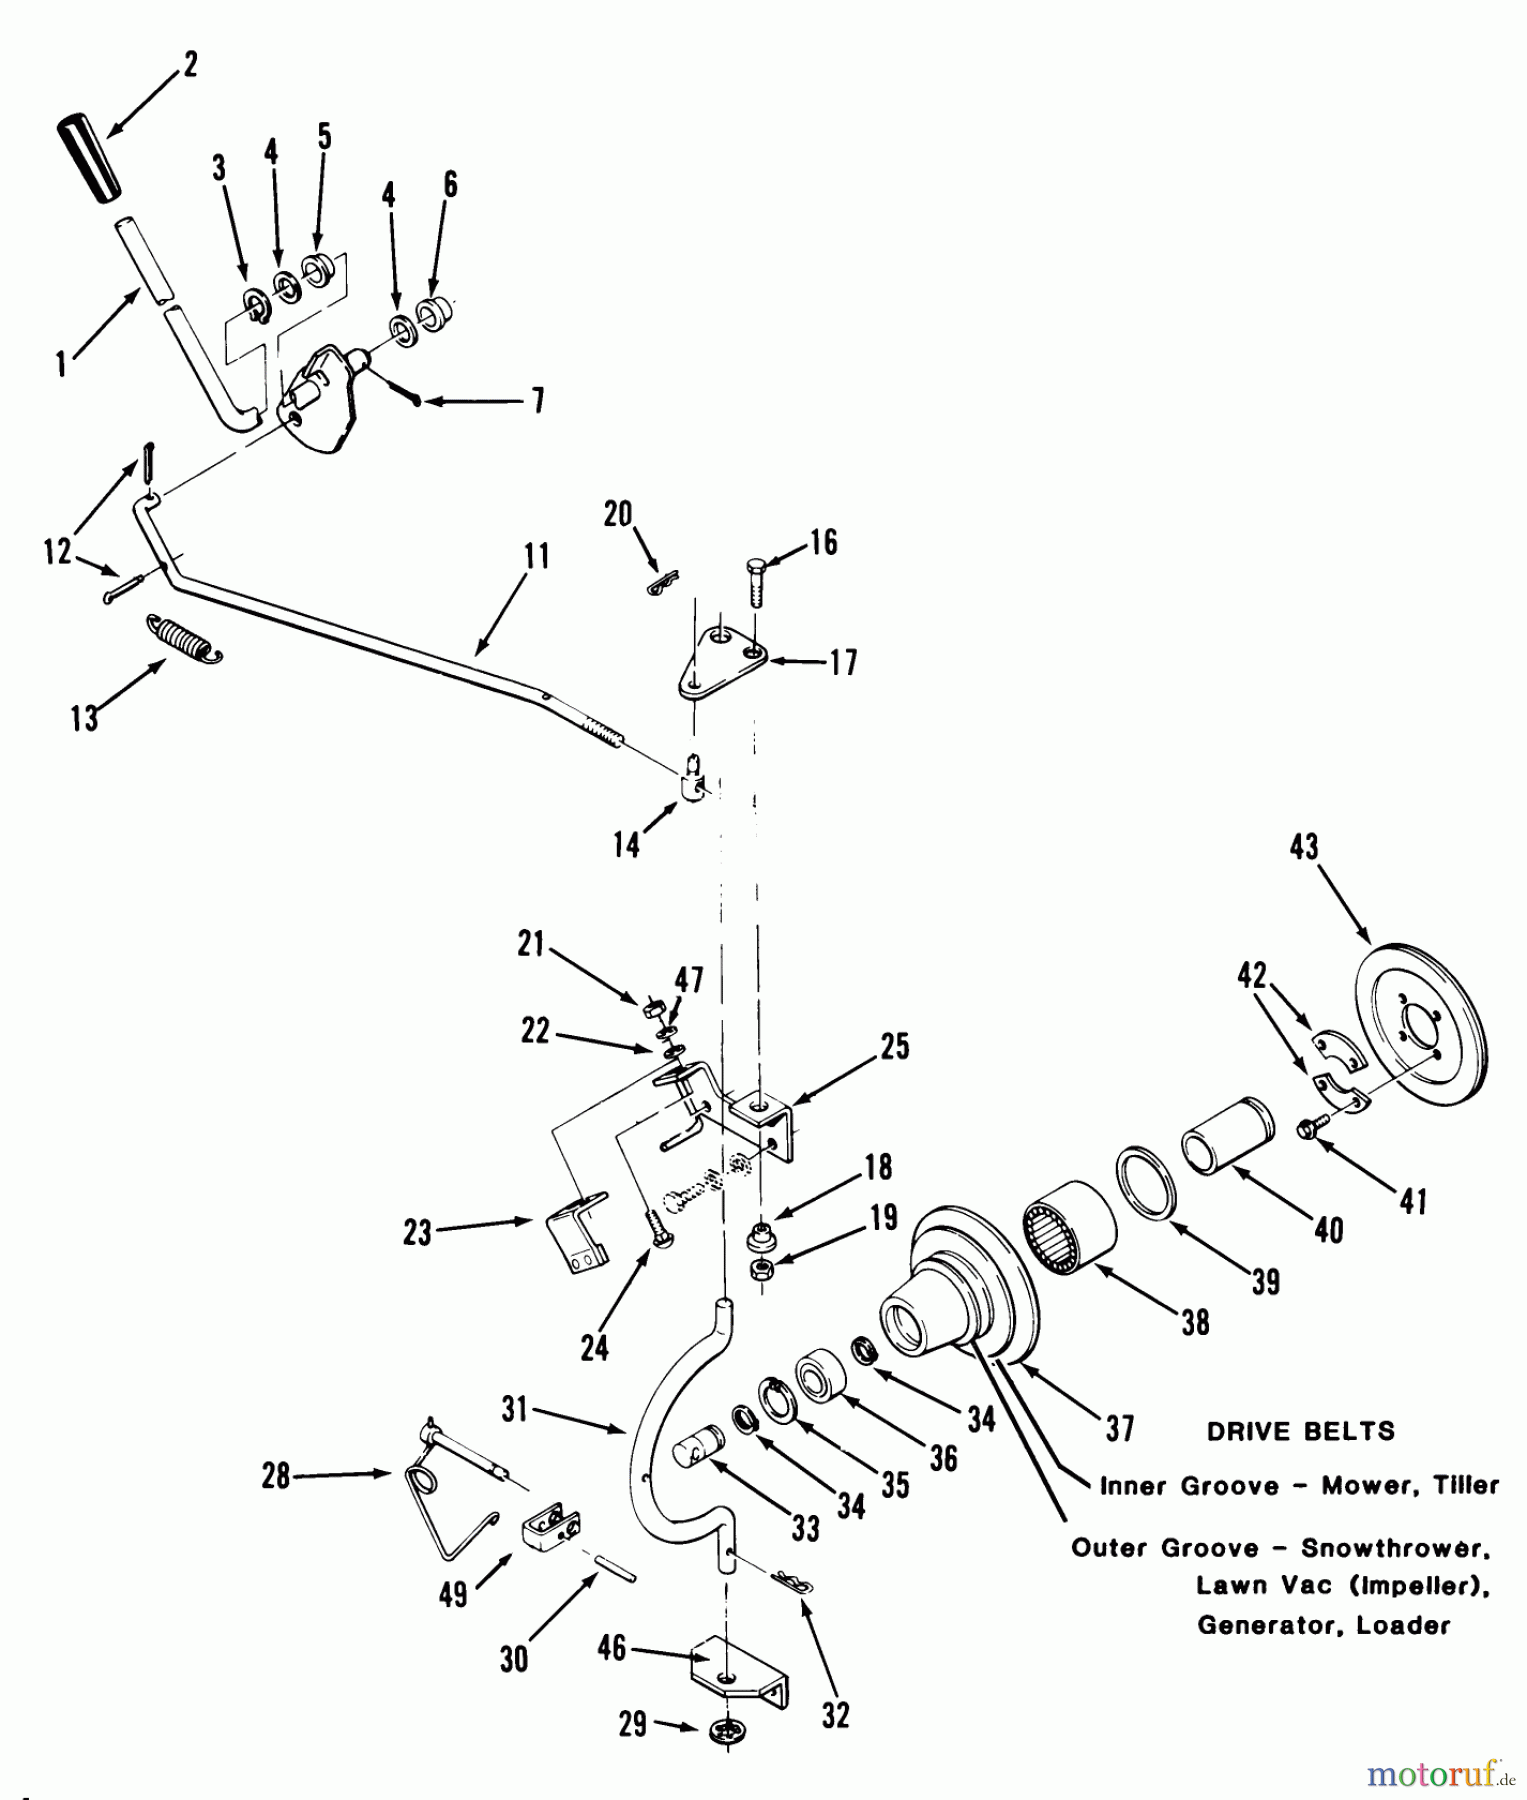  Toro Neu Mowers, Lawn & Garden Tractor Seite 1 31-14K804 (414-8) - Toro 414-8 Garden Tractor, 1989 PTO CLUTCH AND CONTROL